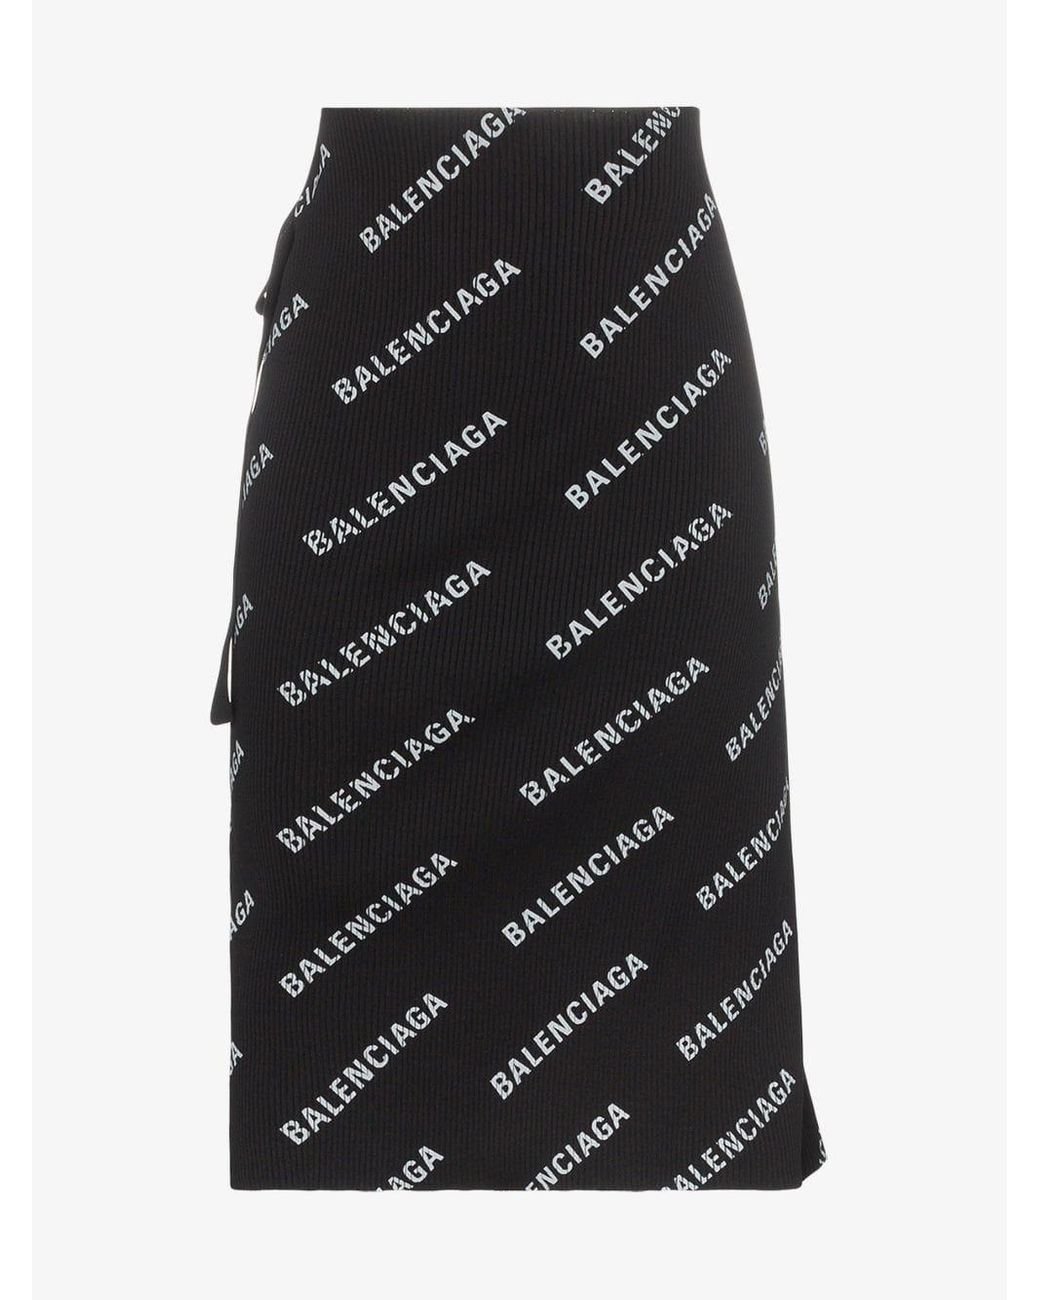 Balenciaga Logo Printed Wrap Skirt in Black | Lyst